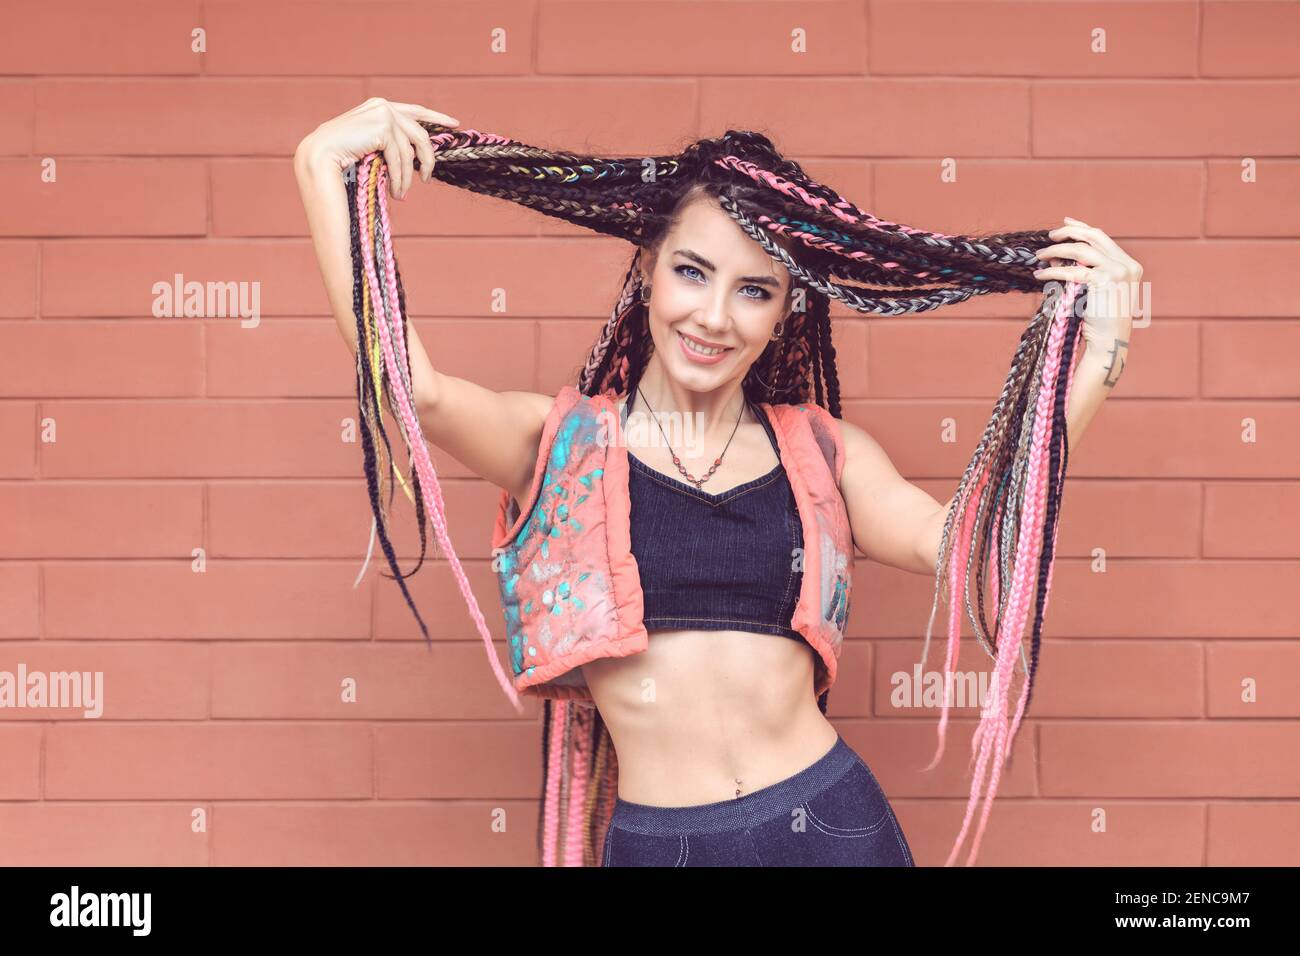 Modern teenage girl with colorful dreadlocks on wall background Stock Photo